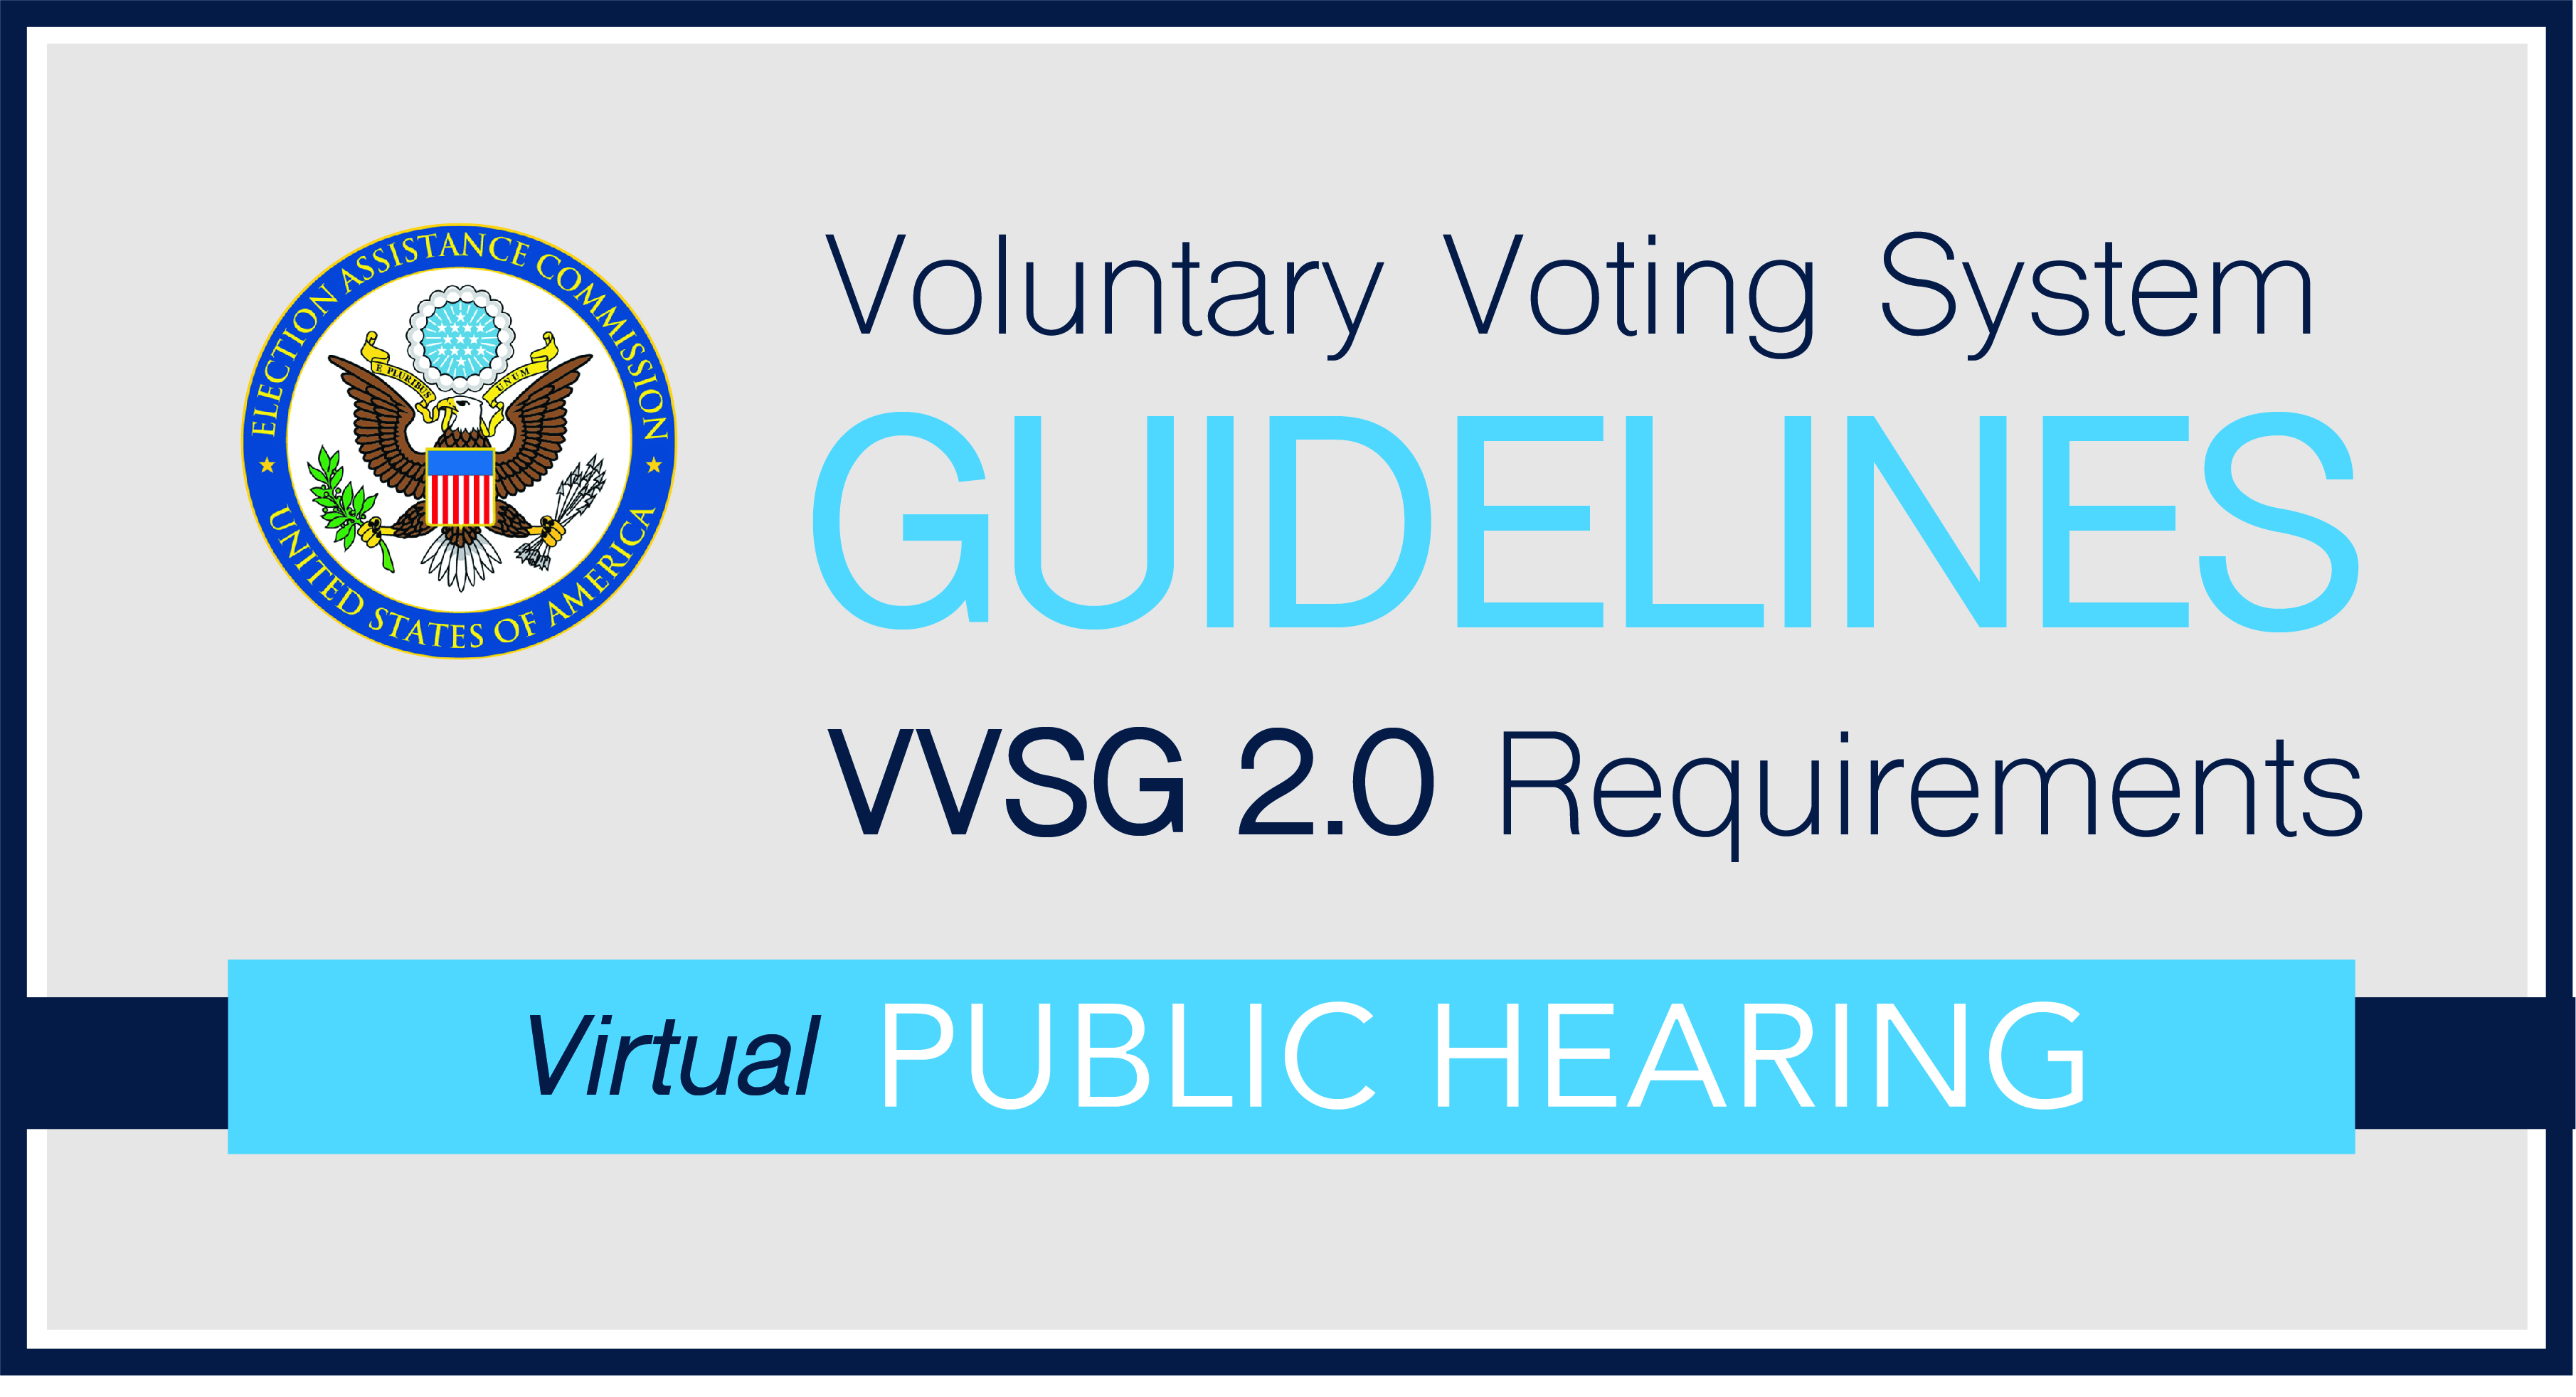 EAC VVSG 2.0 requirements virtual public hearing